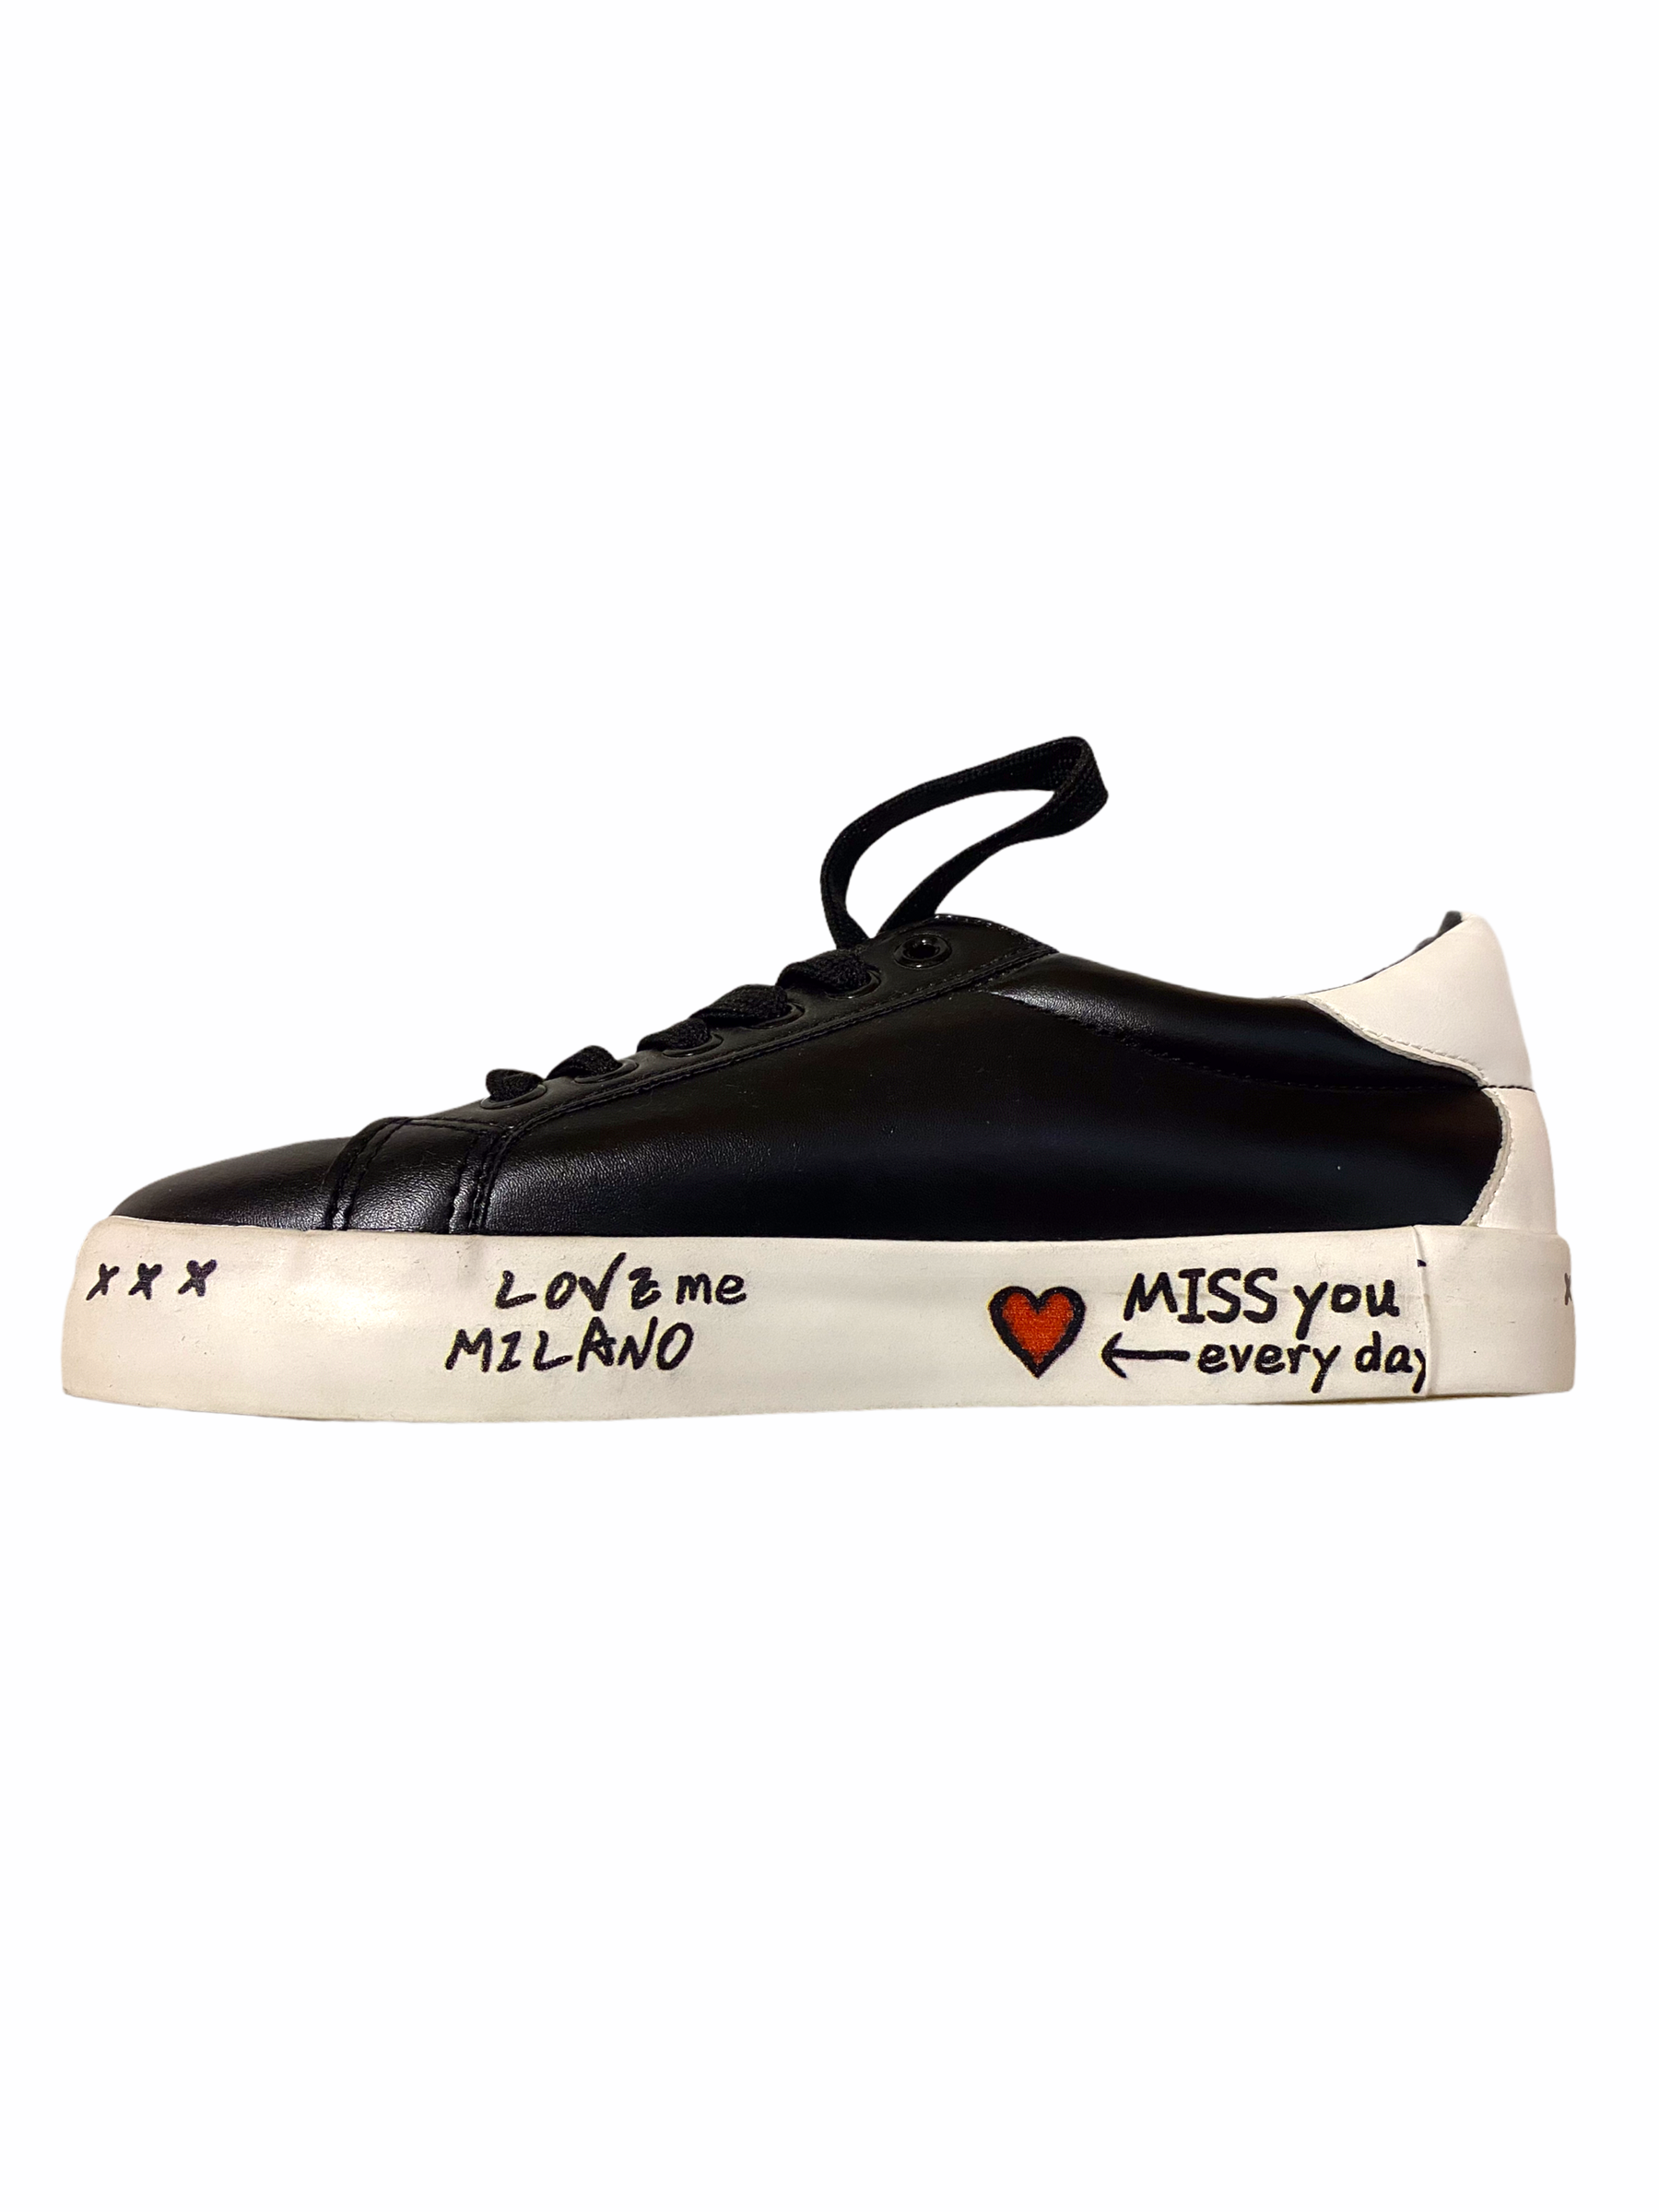 ILY basketball shoes (x12)